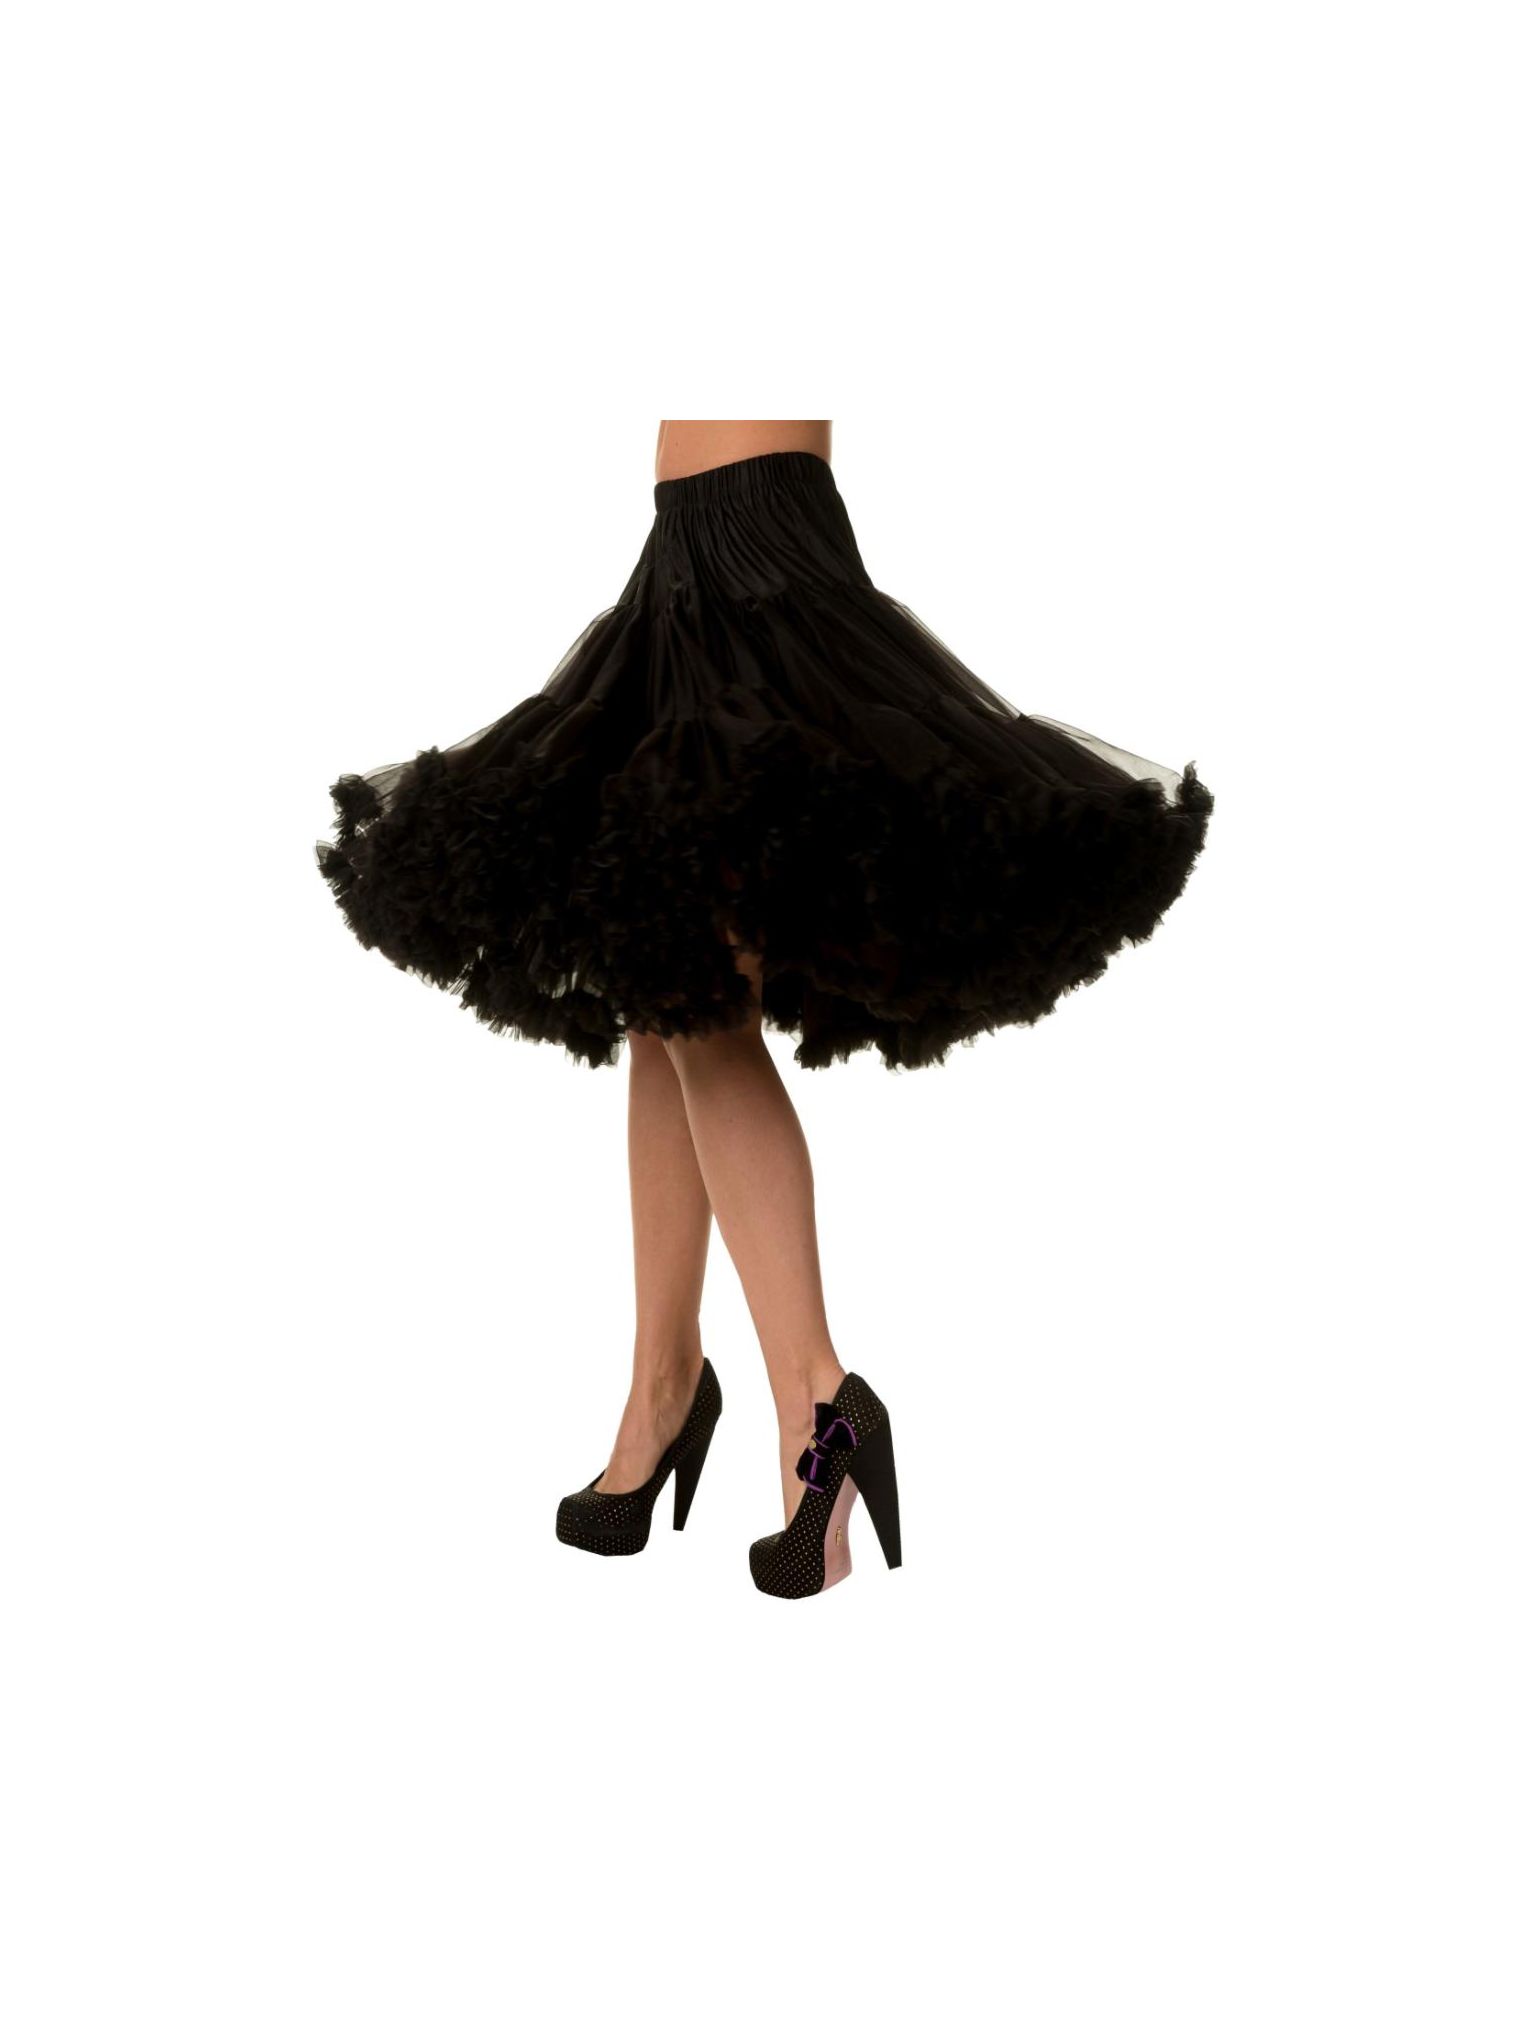 High heeled beauty hawt mini petticoat up petticoat